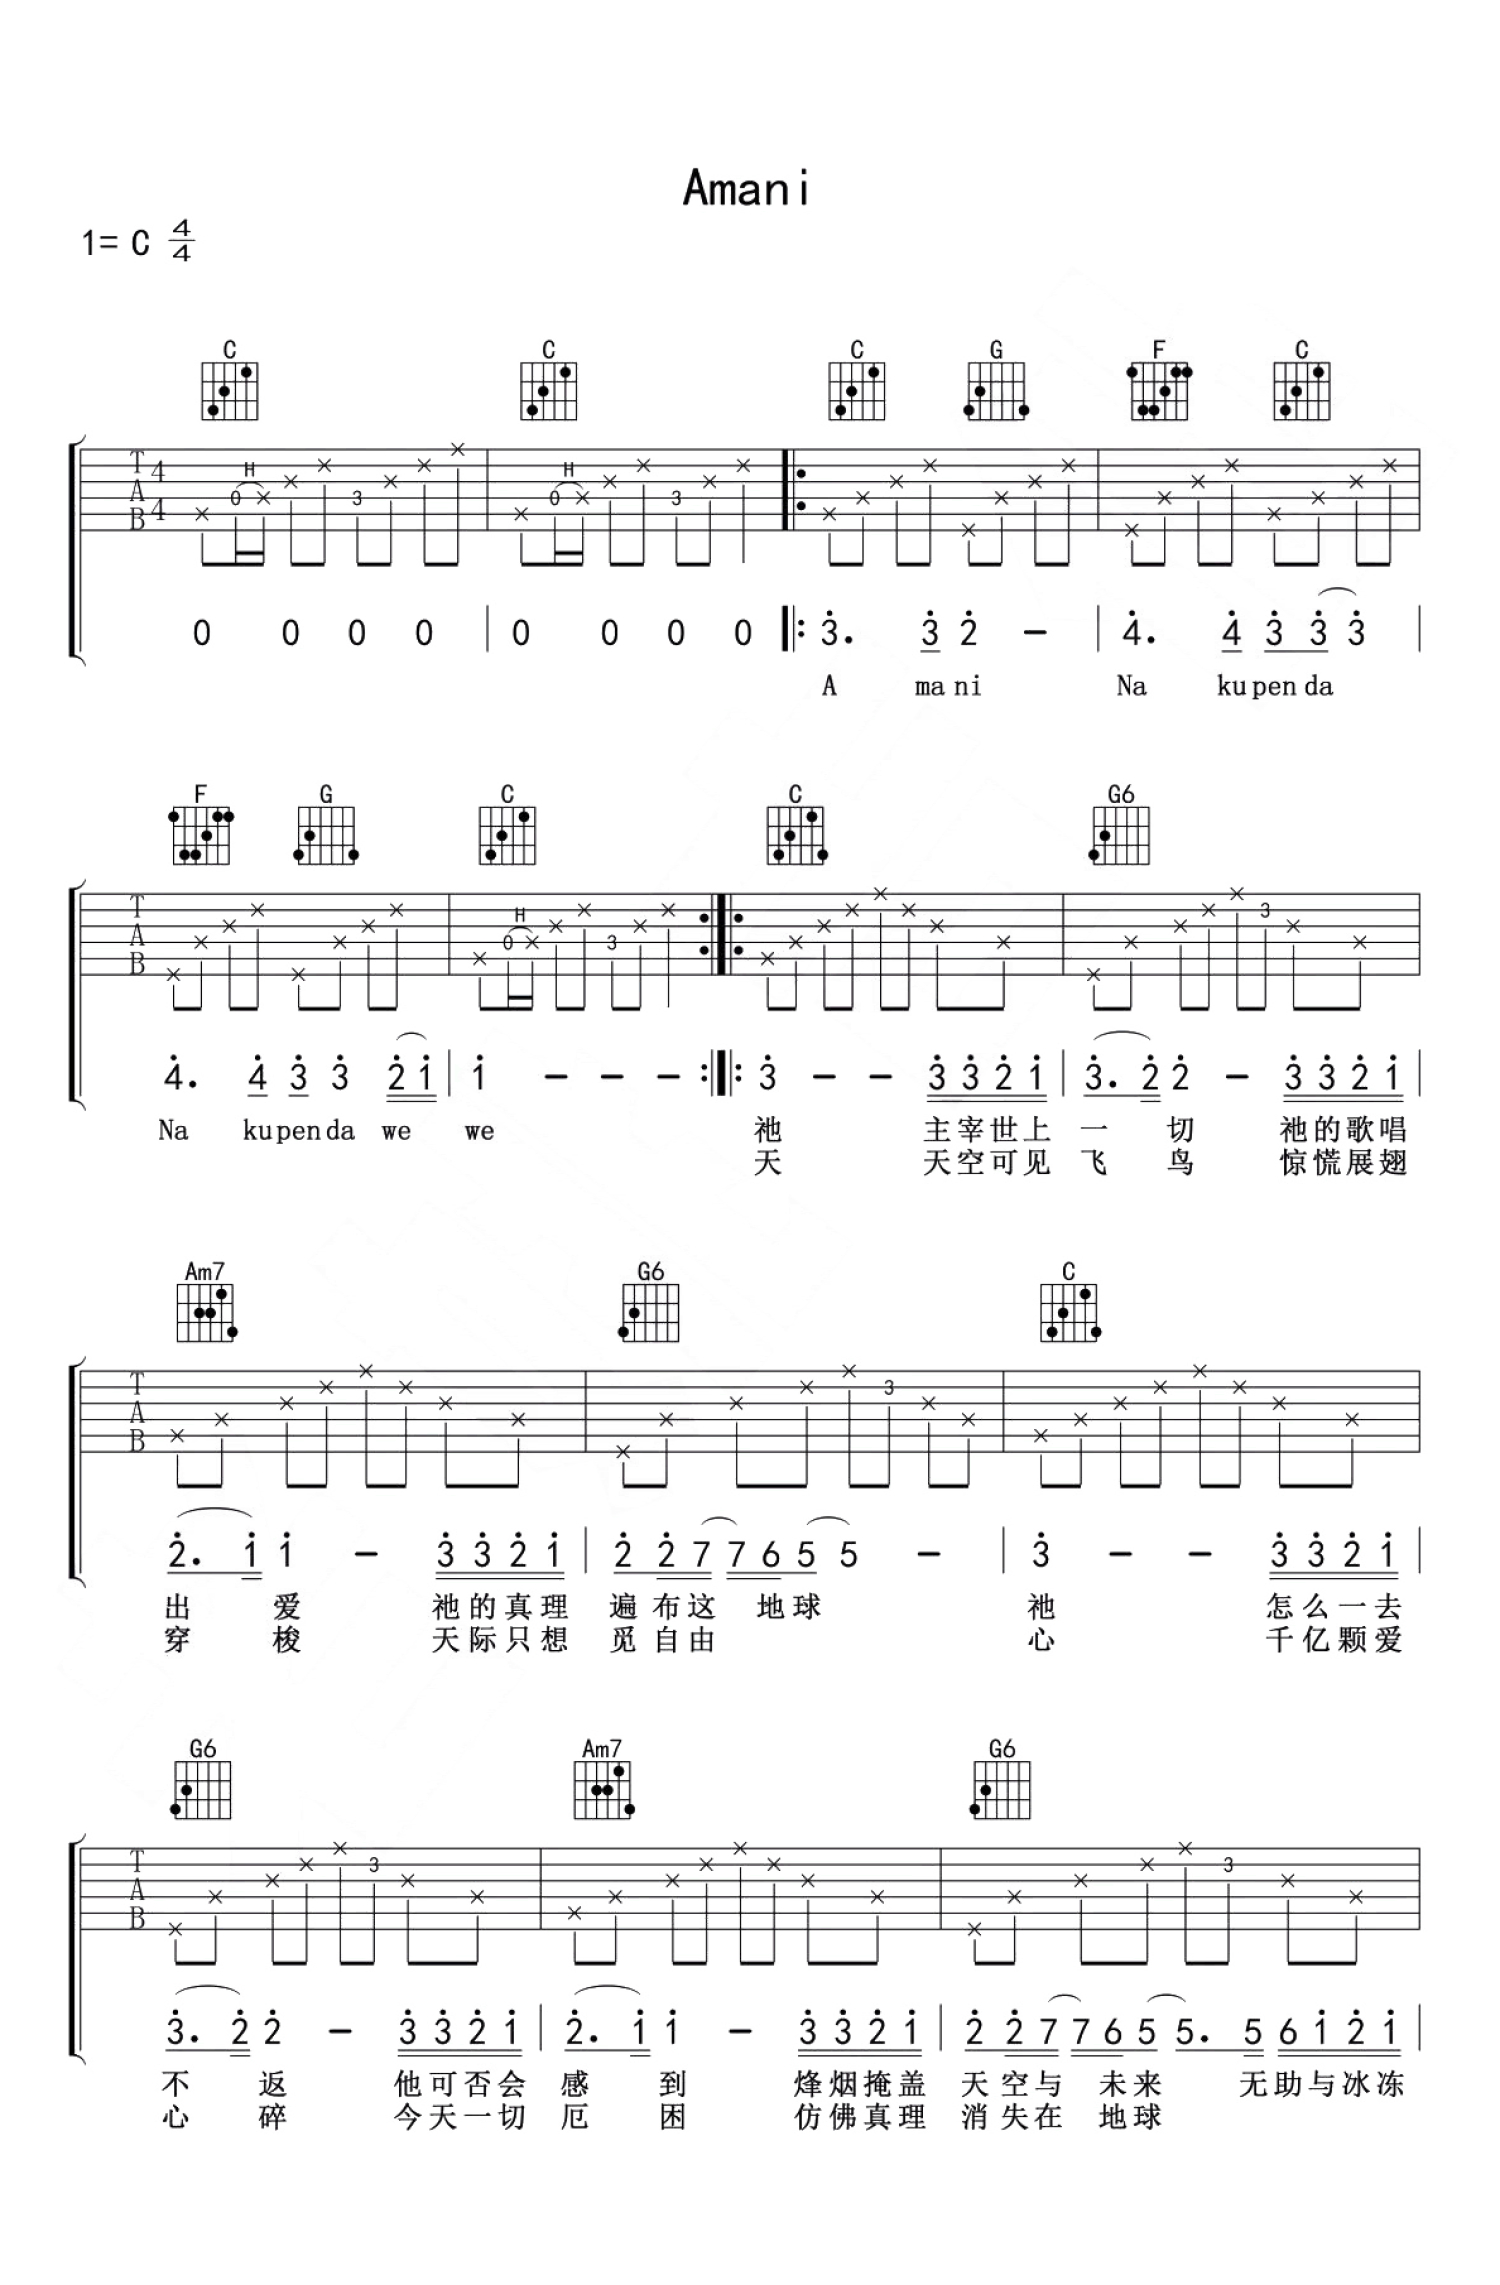 Amani吉他谱-BEYOND-C调完整原版六线谱-曲谱热